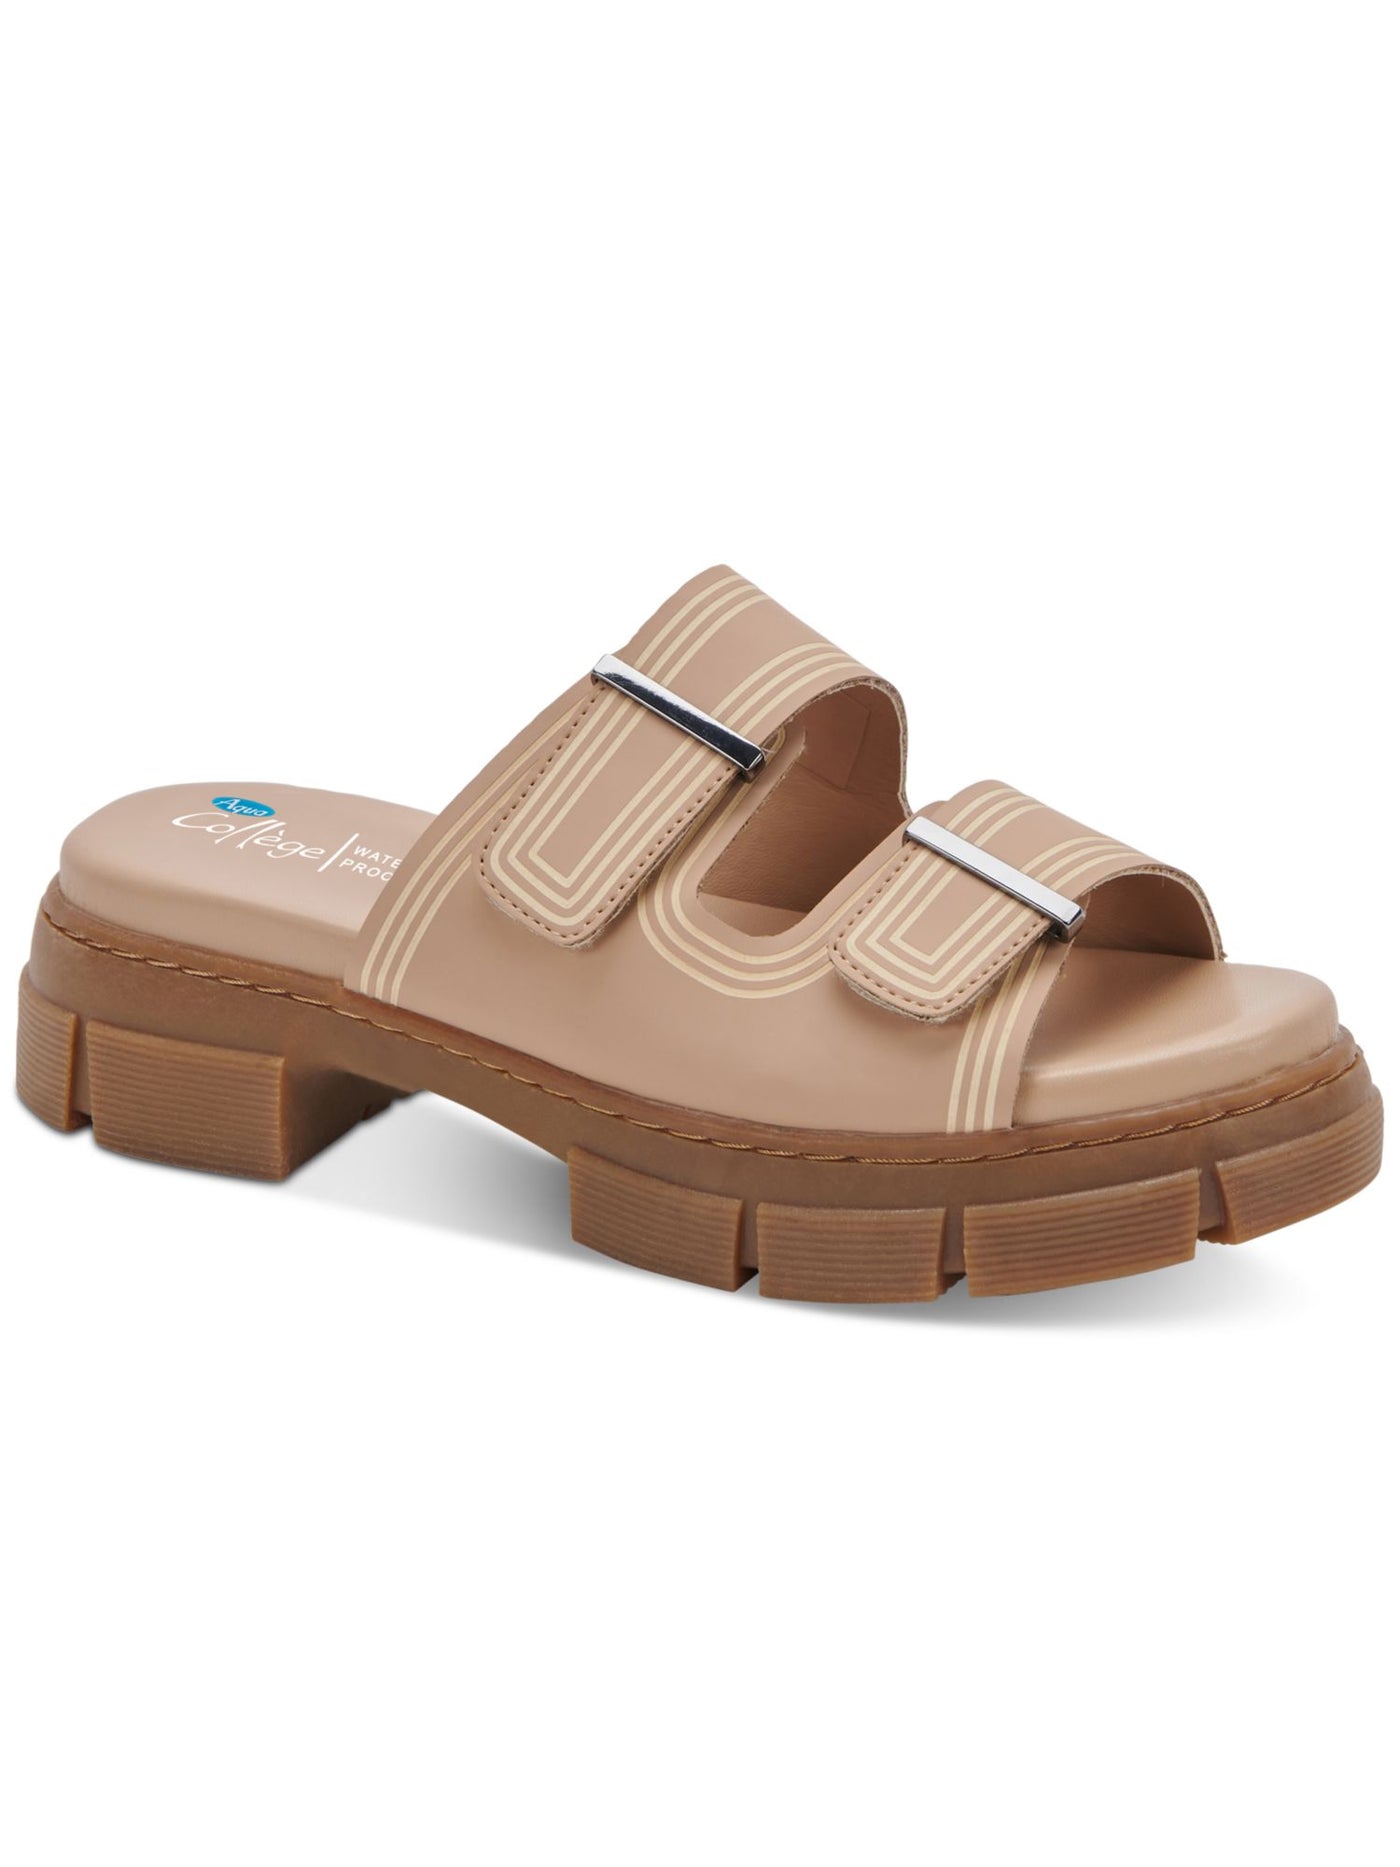 AQUA COLLEGE Womens Beige Adjustable Strap Water Resistant Hippie Round Toe Block Heel Slip On Slide Sandals Shoes 10 M